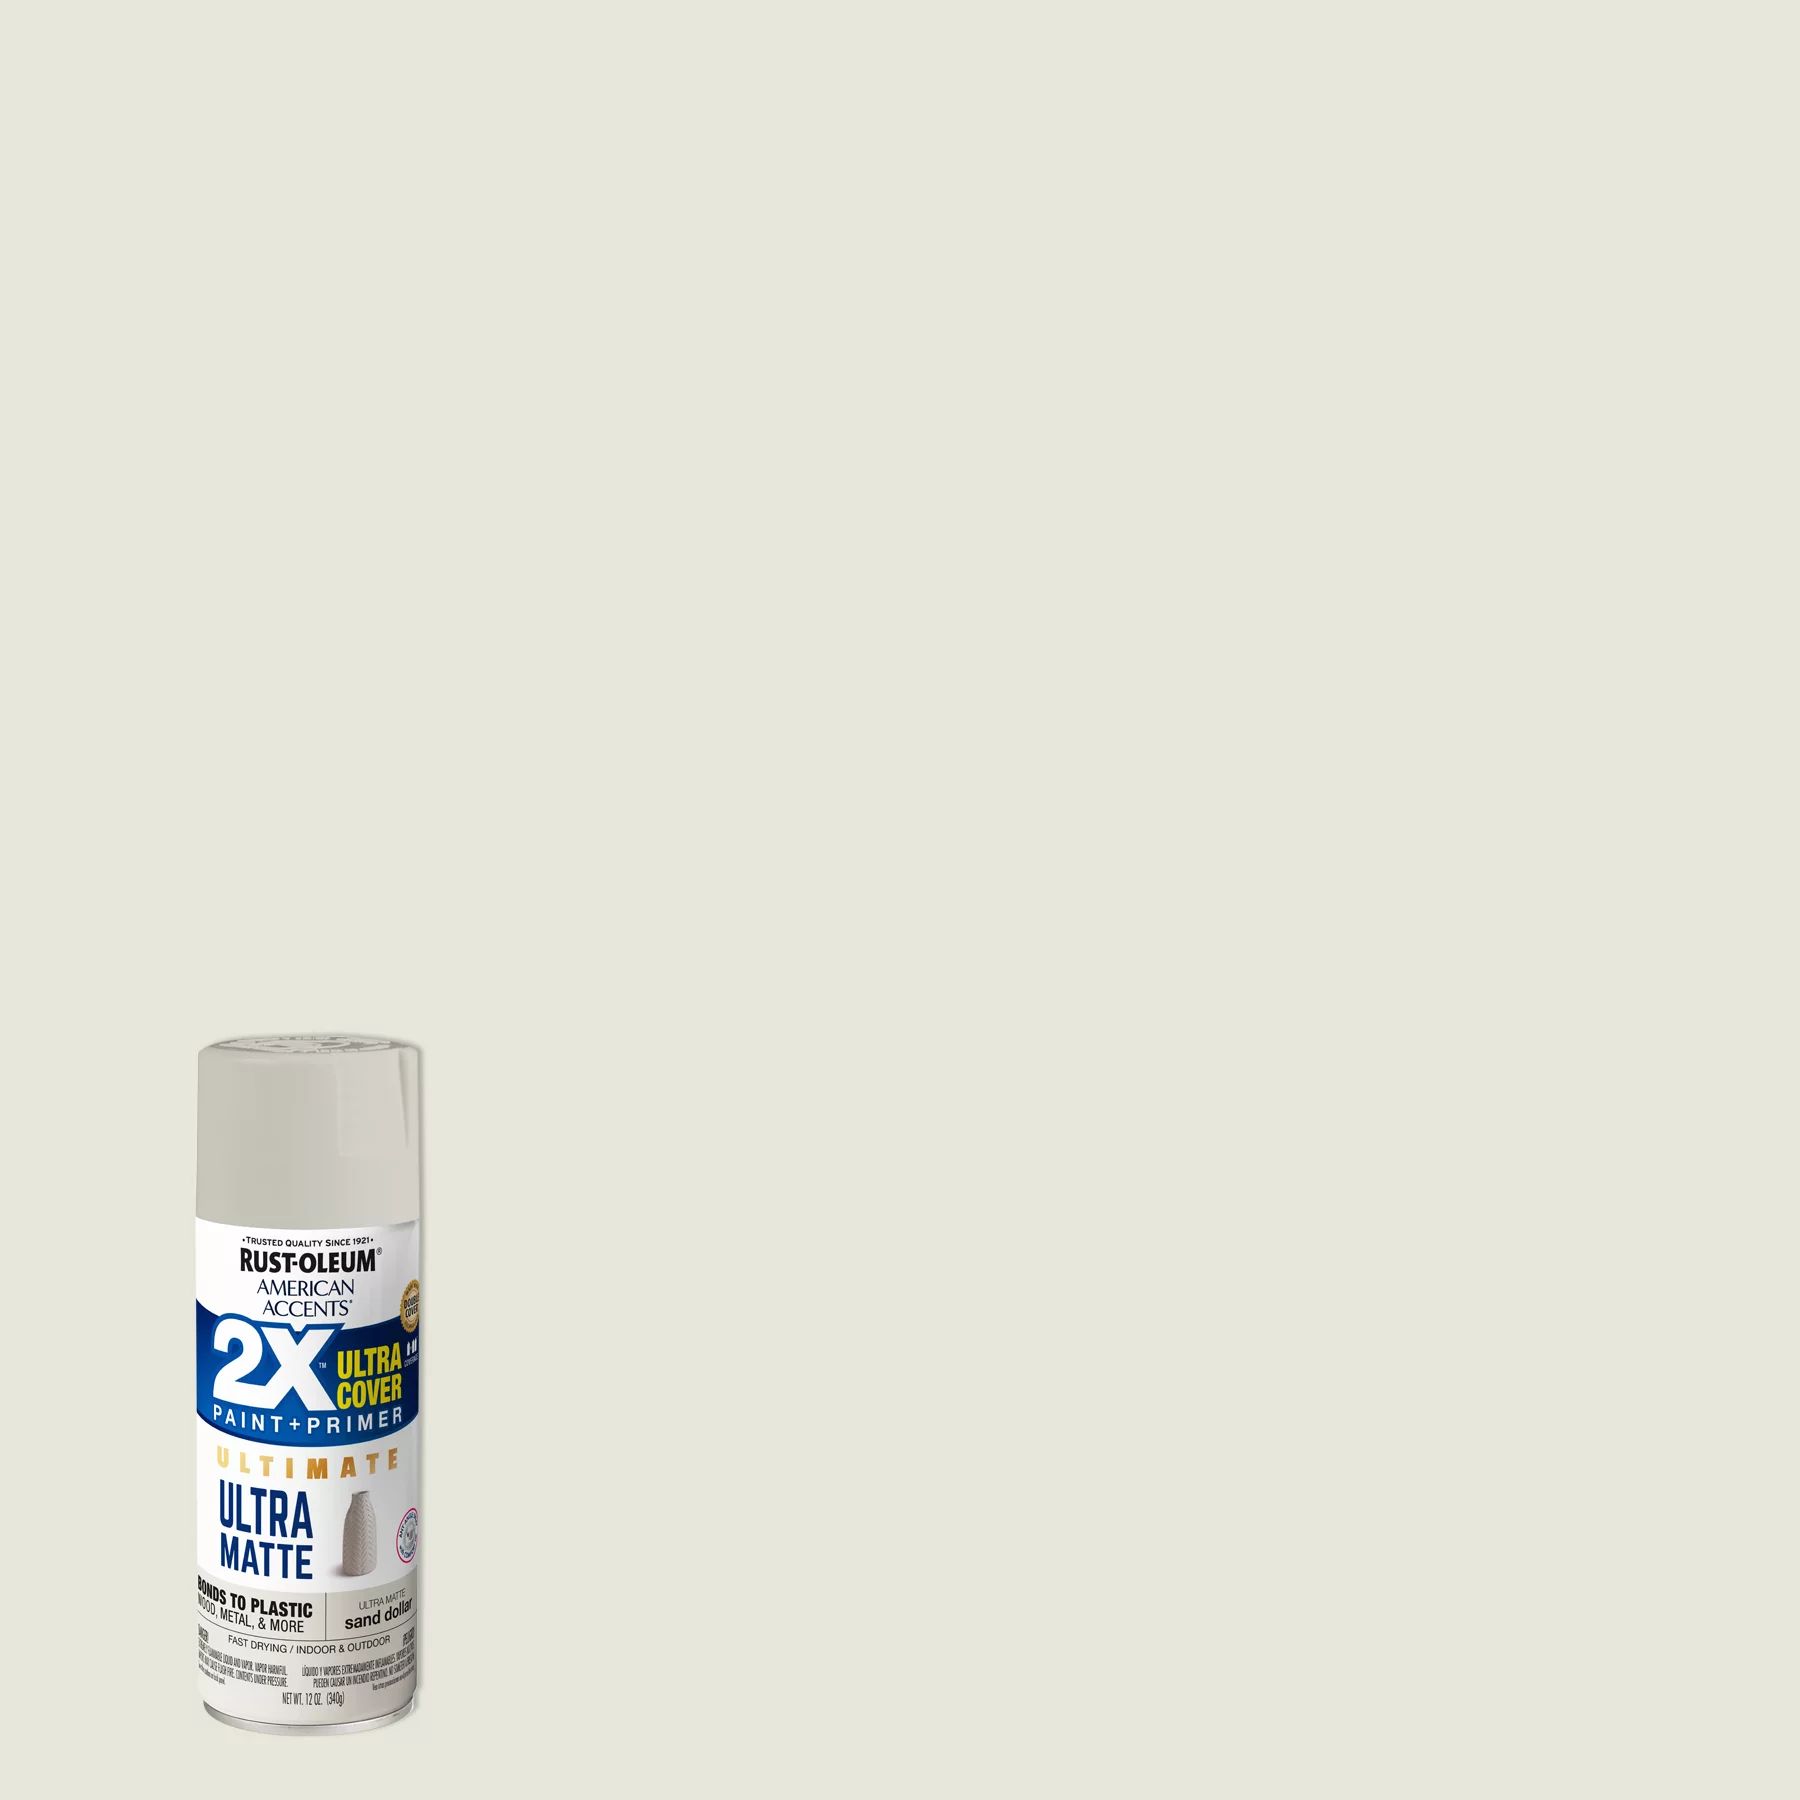 Sand Dollar, Rust-Oleum American Accents 2X Ultra Matte Spray Paint, 12 oz | Walmart (US)